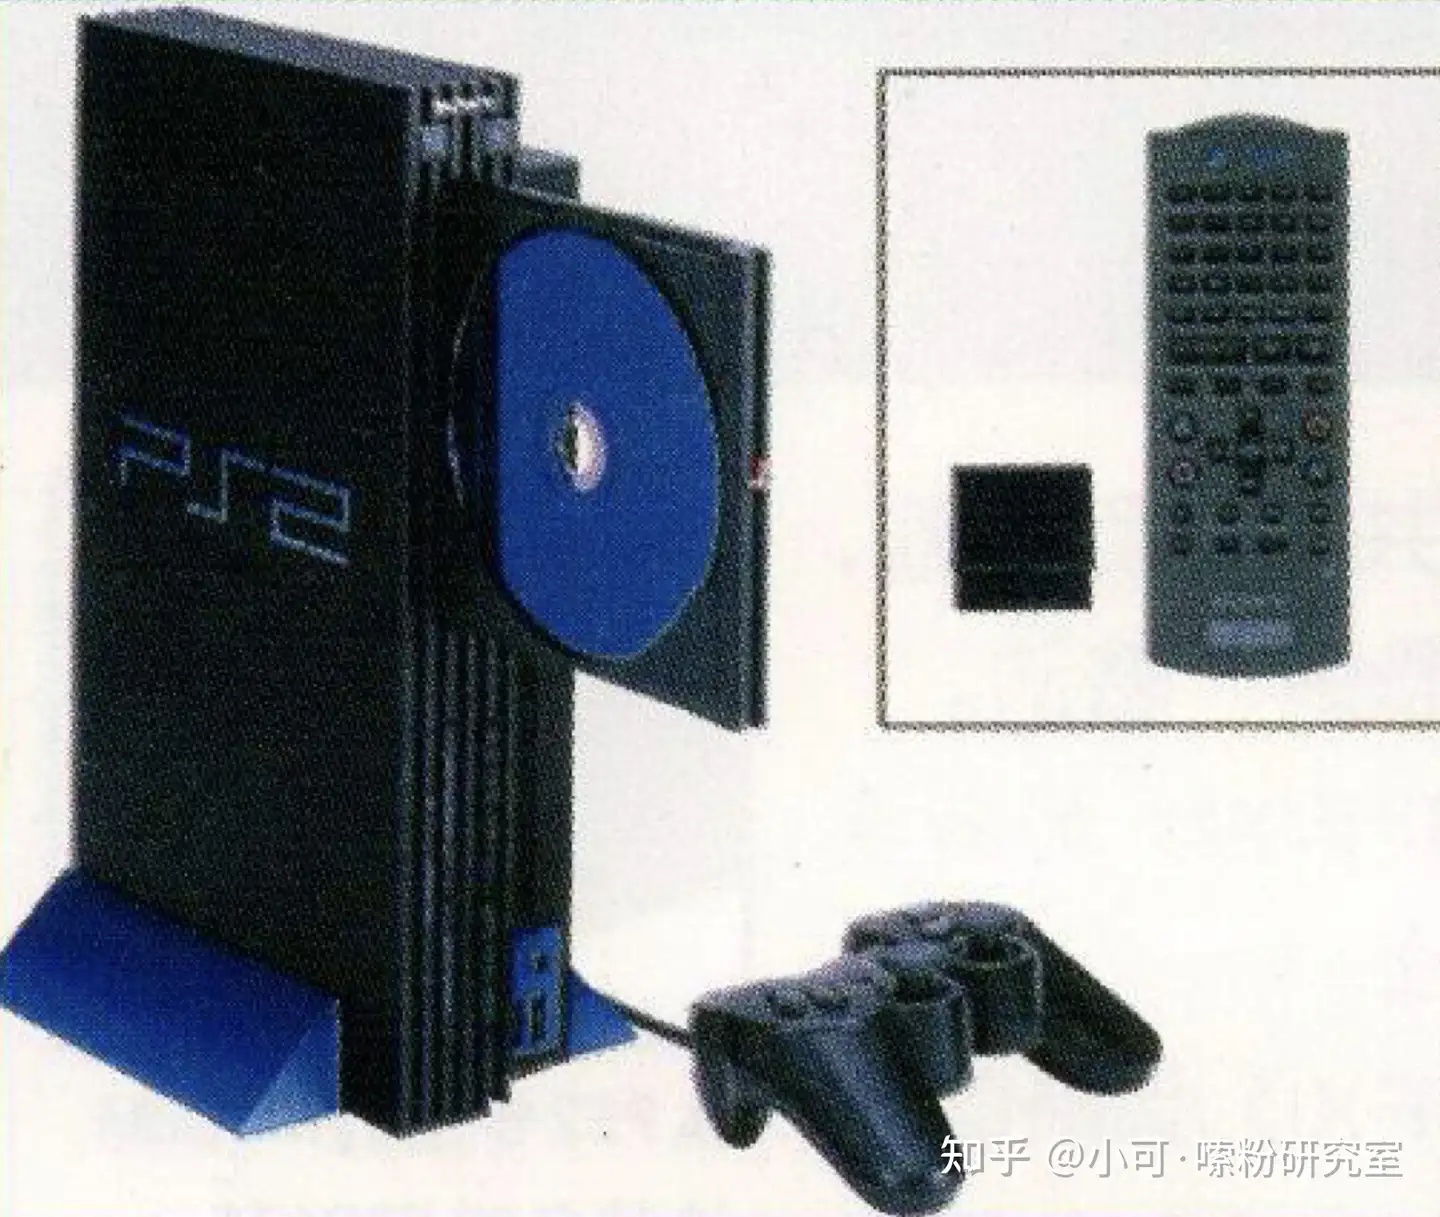 PS2机型进阶之路- 知乎